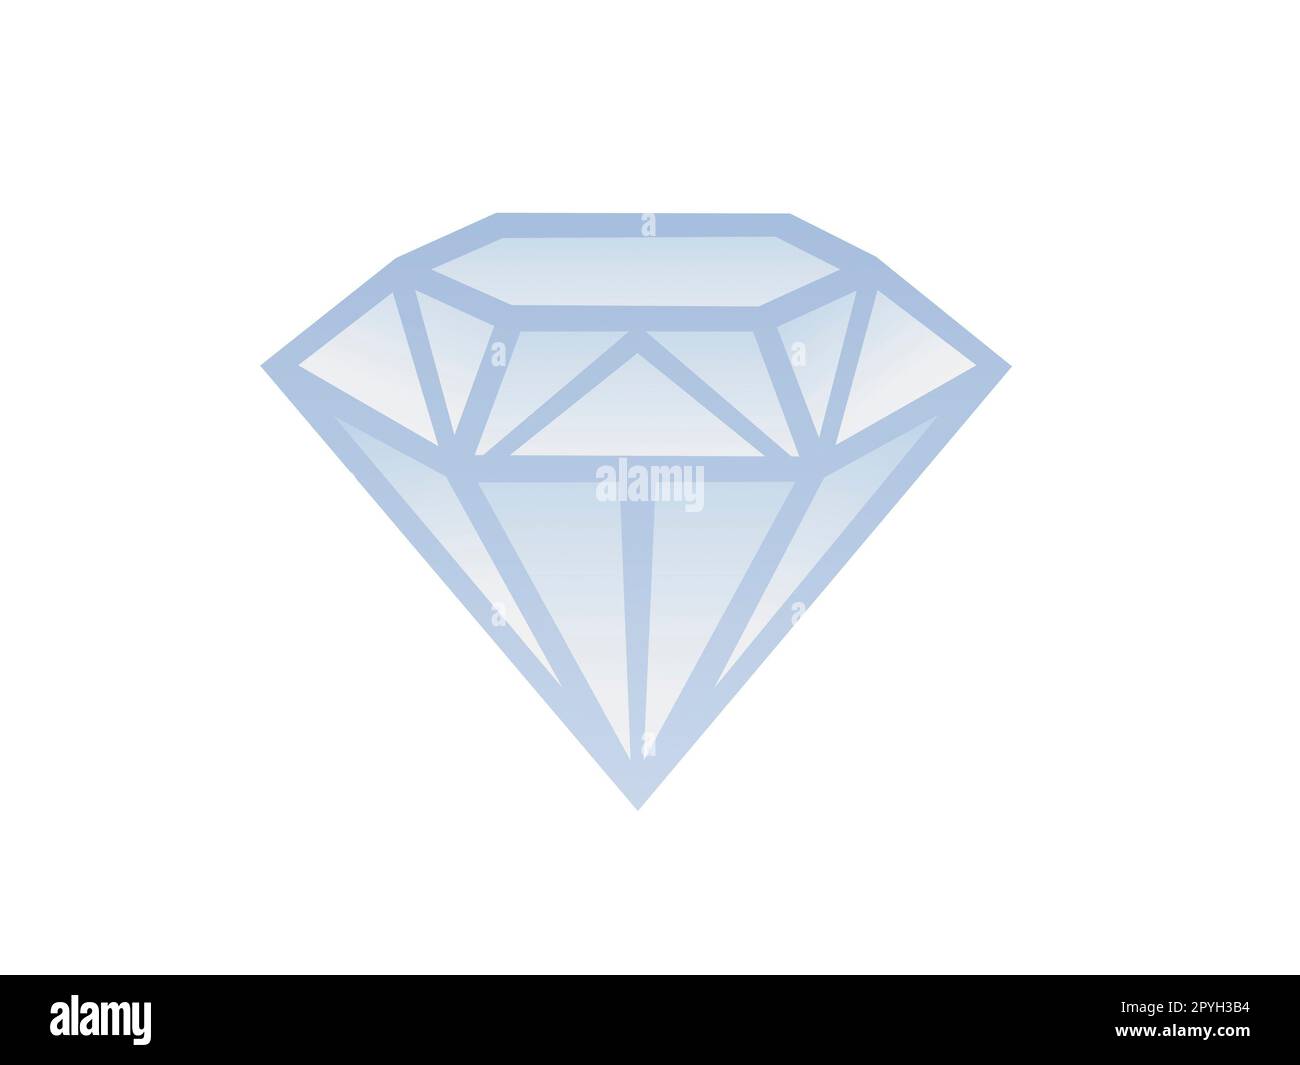 A realistic diamond. No gradient mesh on white background Stock Photo